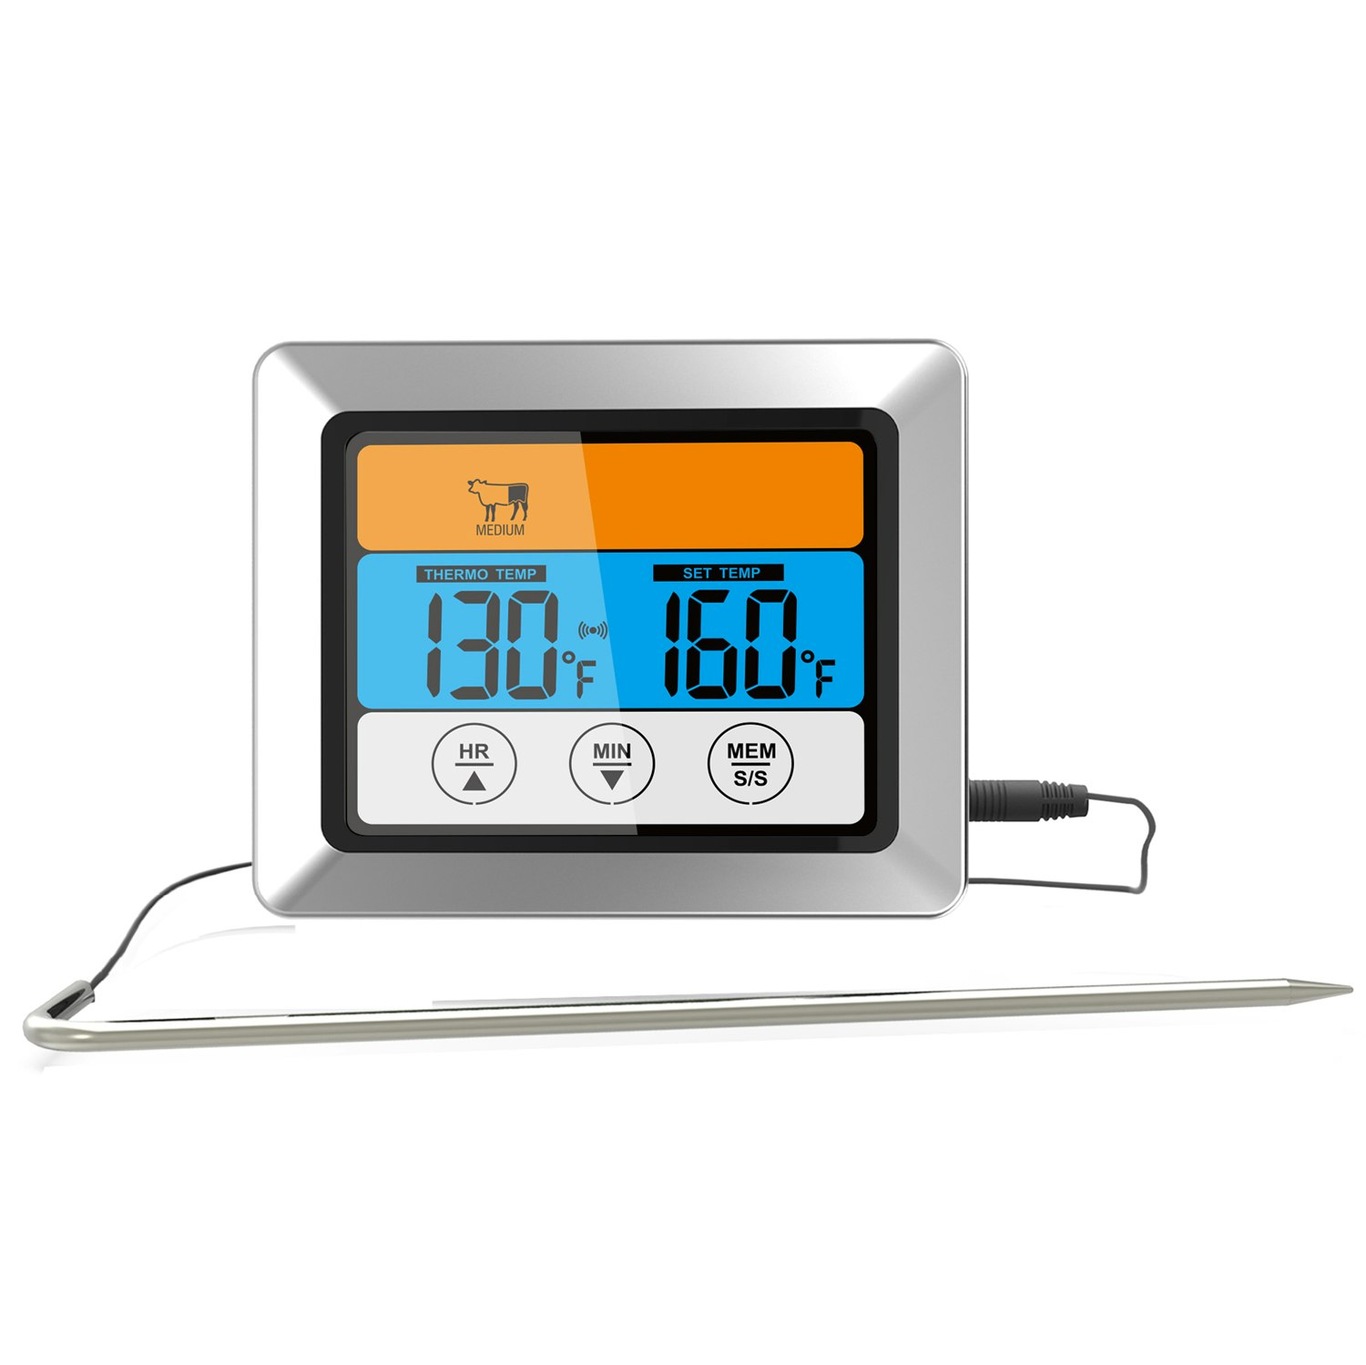 https://royaldesign.com/image/2/dorre-grad-meat-thermometer-0?w=800&quality=80